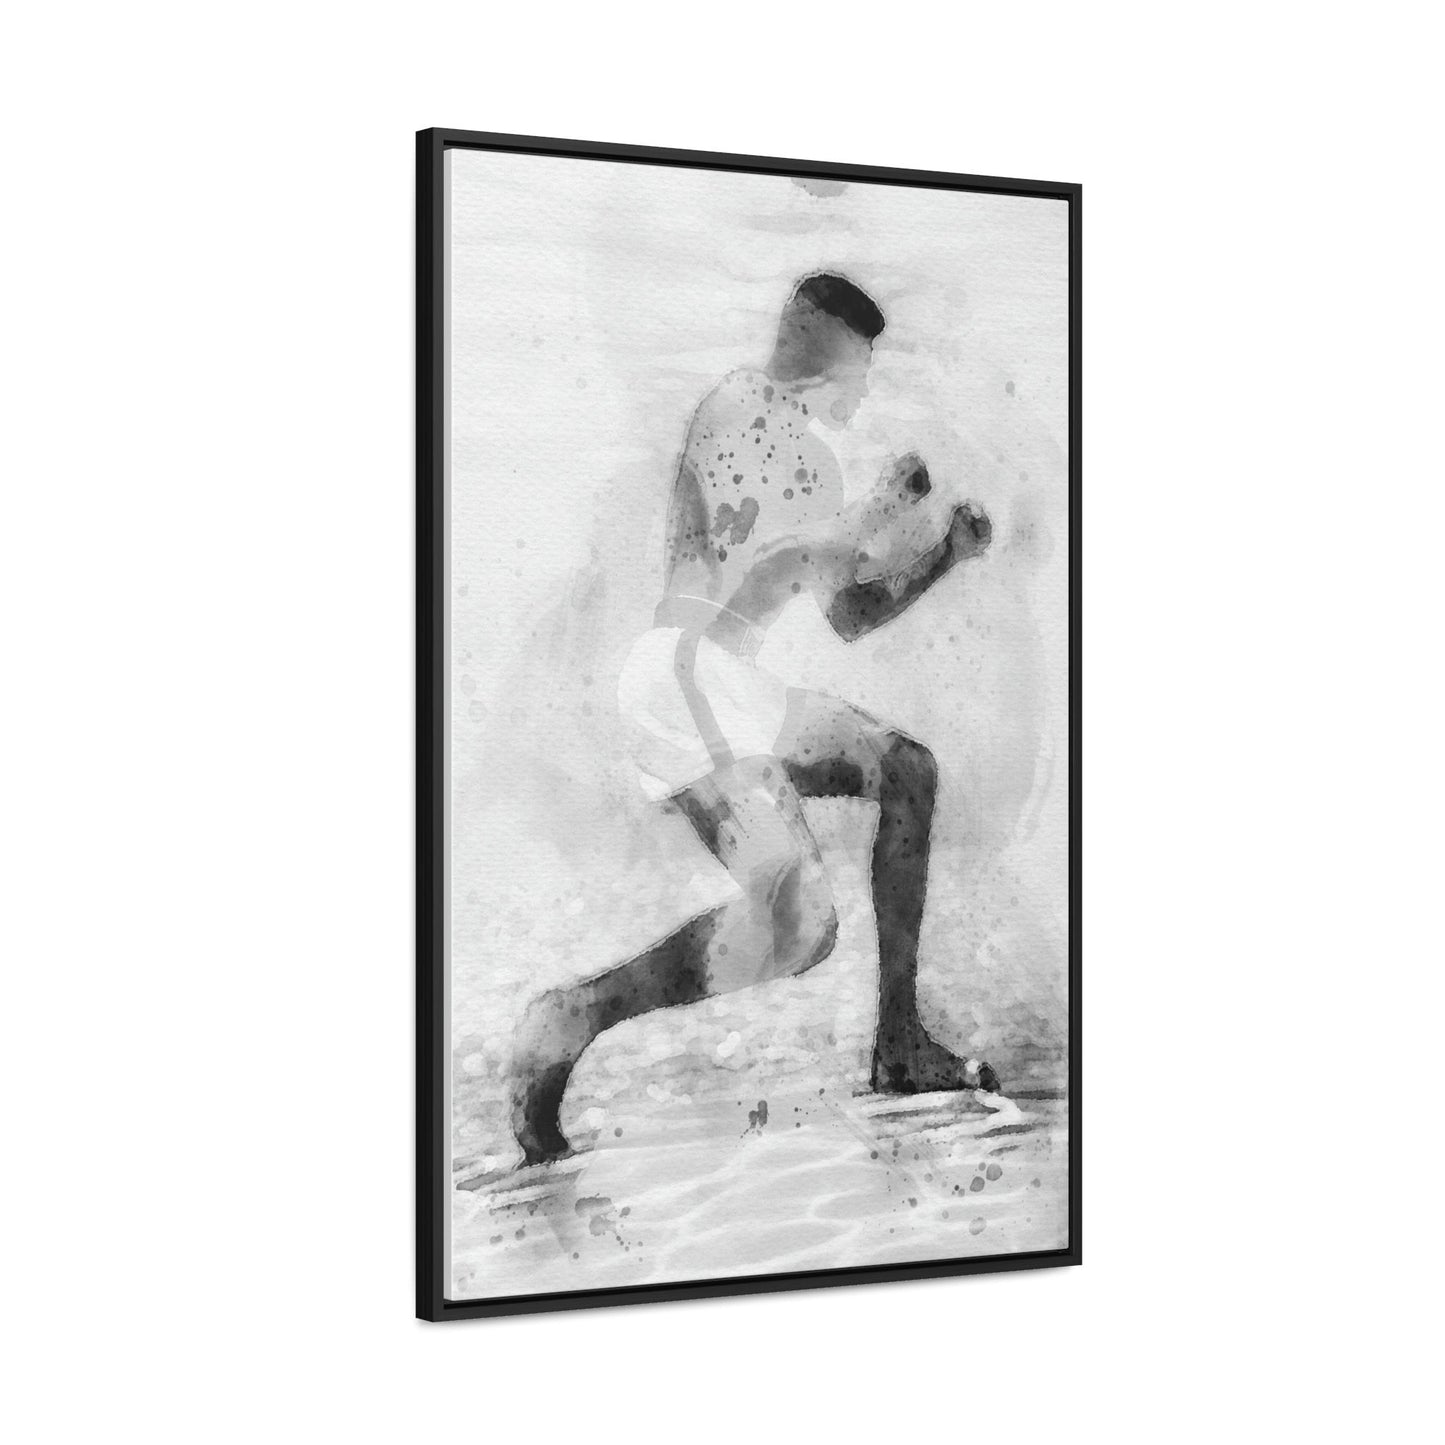 Muhammad Ali Poster Print, Ali Underwater, Canvas Wrap, Man Cave, Kids Room, Game Room, Bar